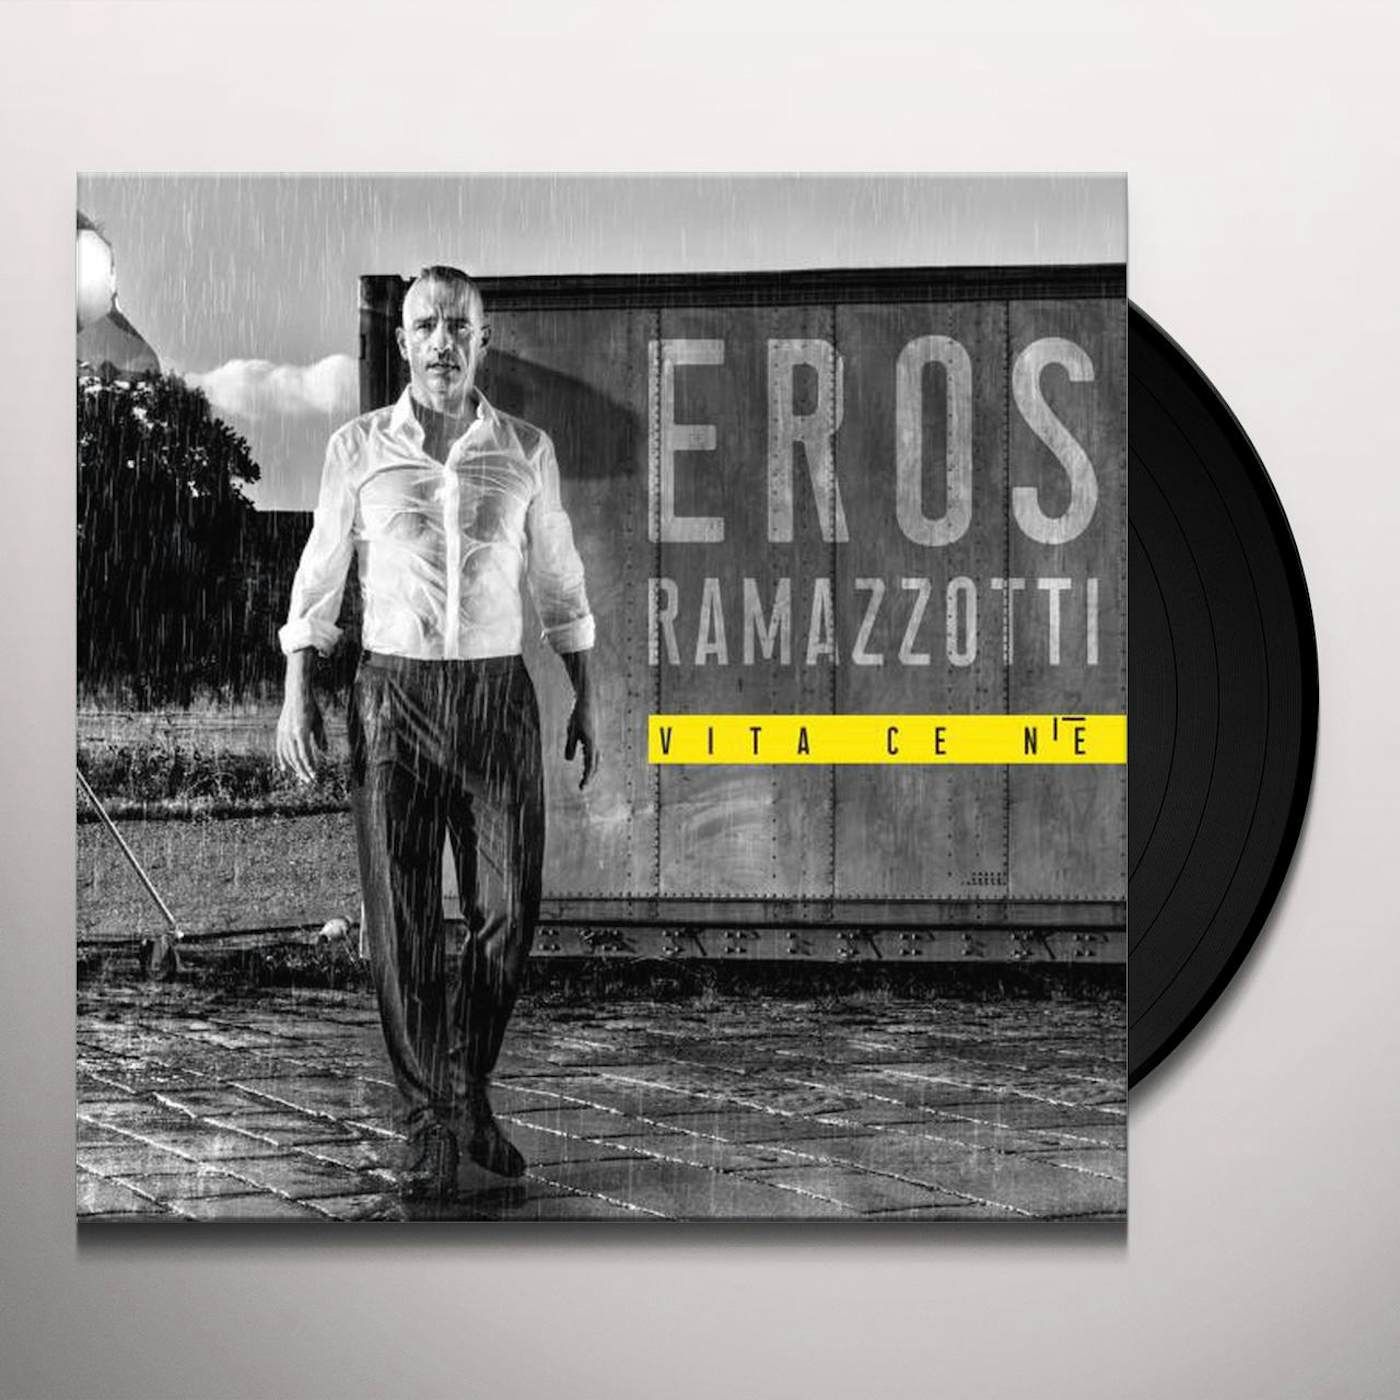 Eros Ramazzotti VITA CE N'E Vinyl Record